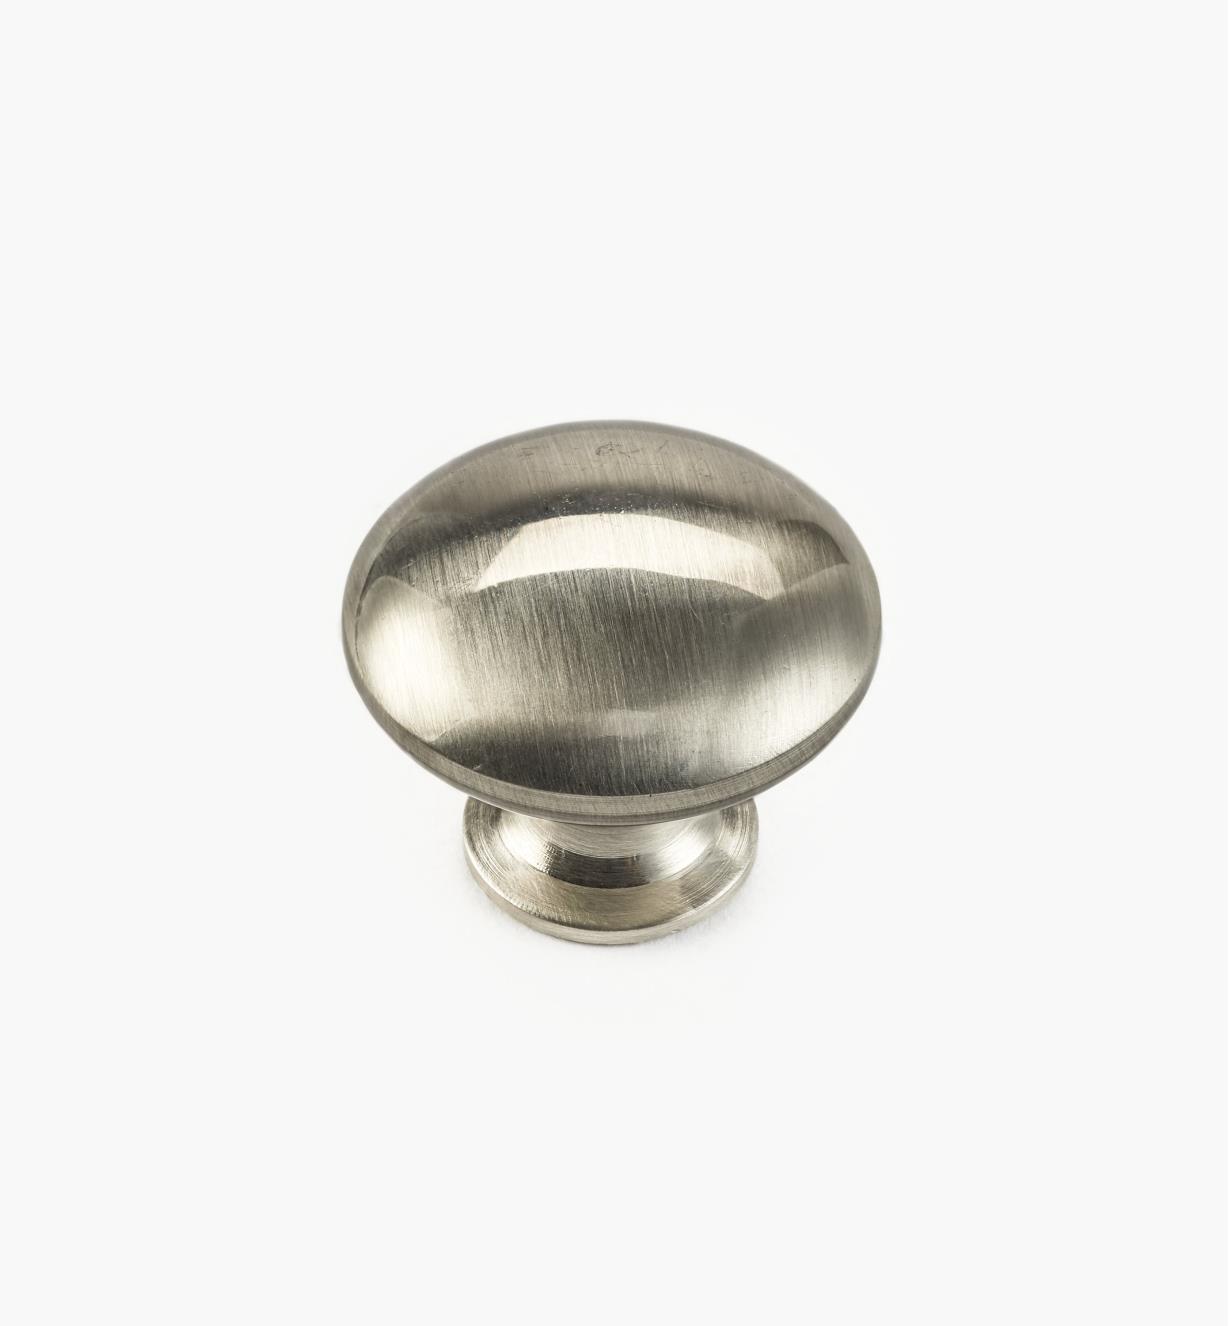 02W4286 - 1 1/8" x 7/8" Brushed Nickel Knob